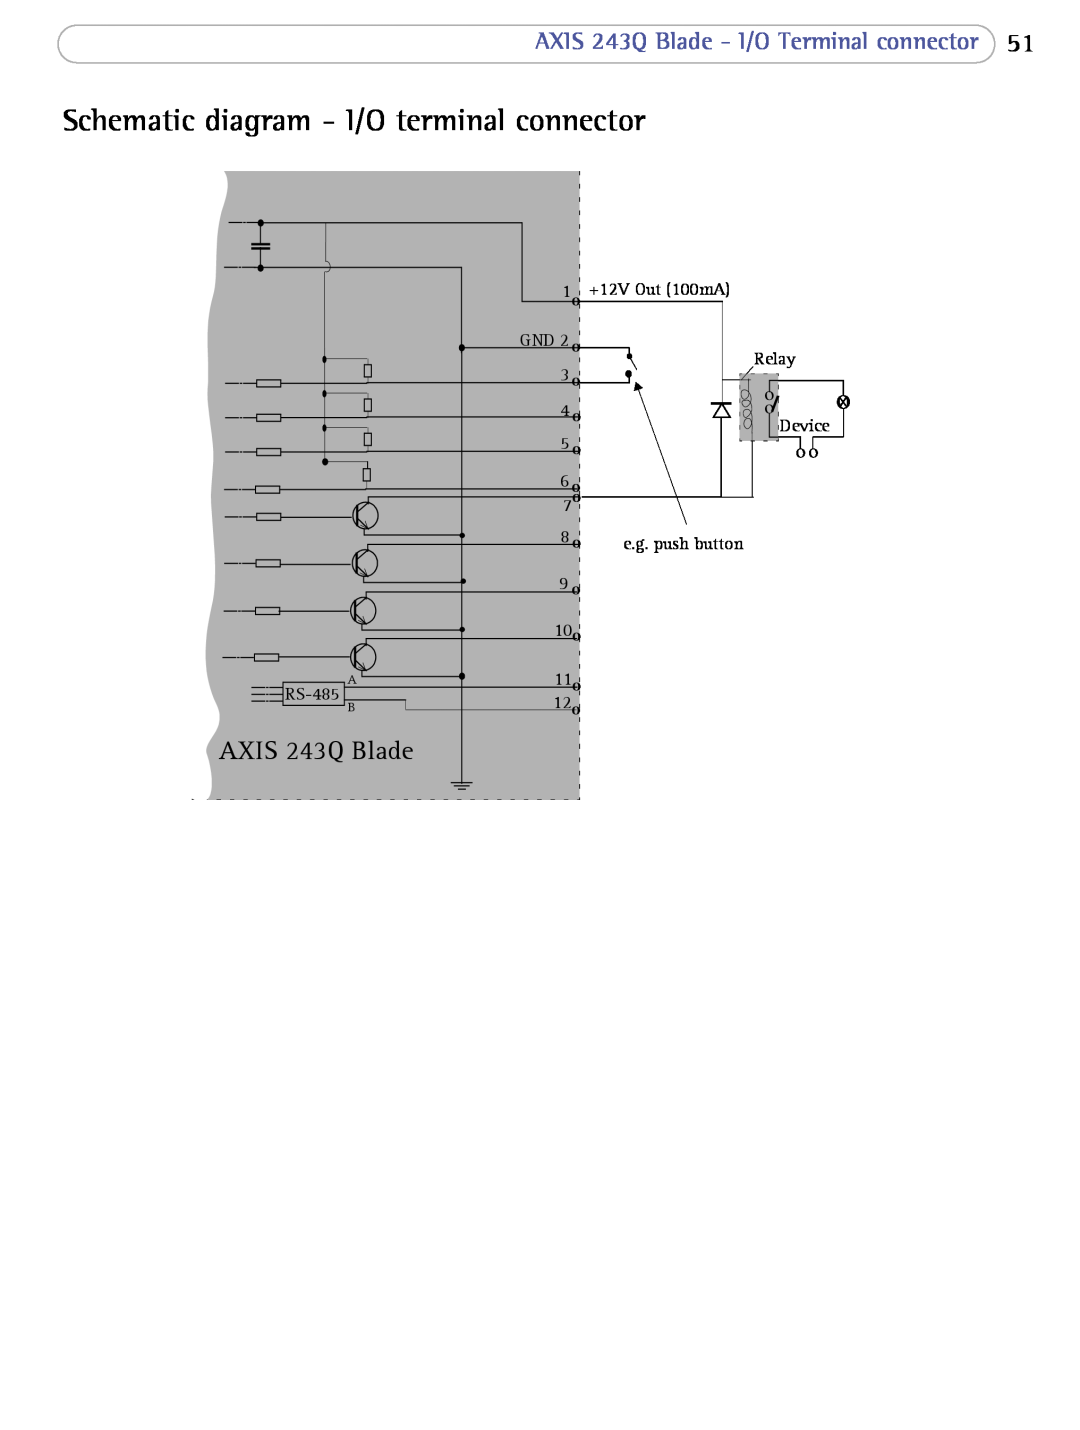 Axis Communications user manual Schematic diagram - I/O terminal connector, AXIS 243Q Blade - I/O Terminal connector 